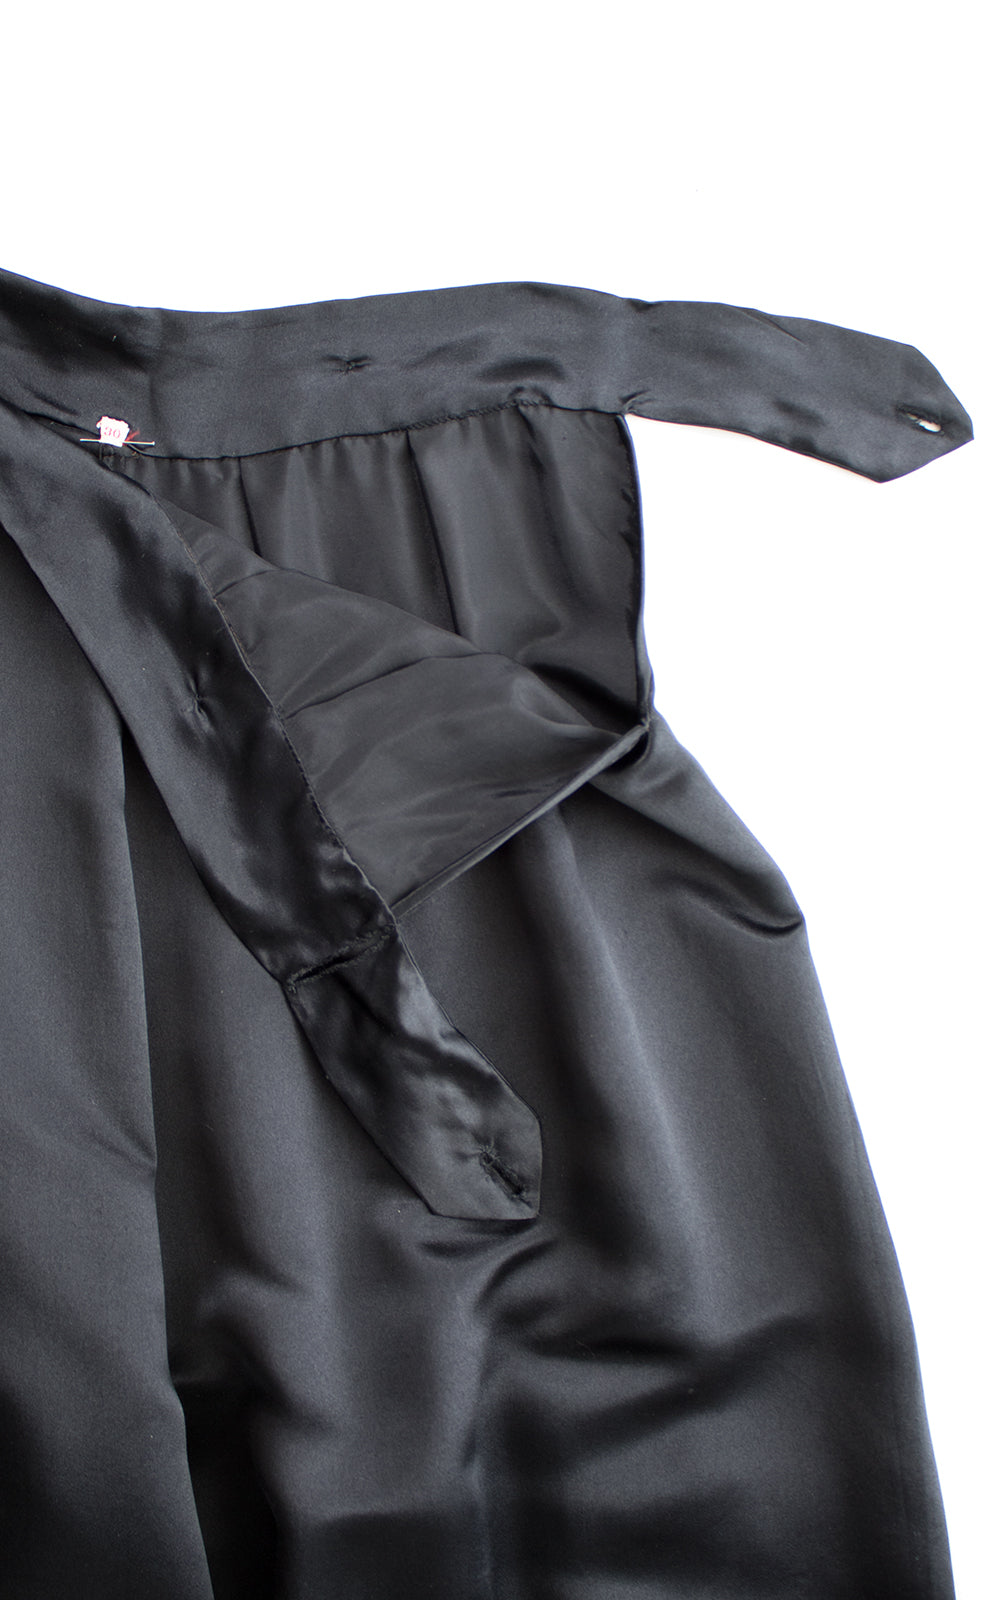 1930s 1940s Black Silk Satin Pants